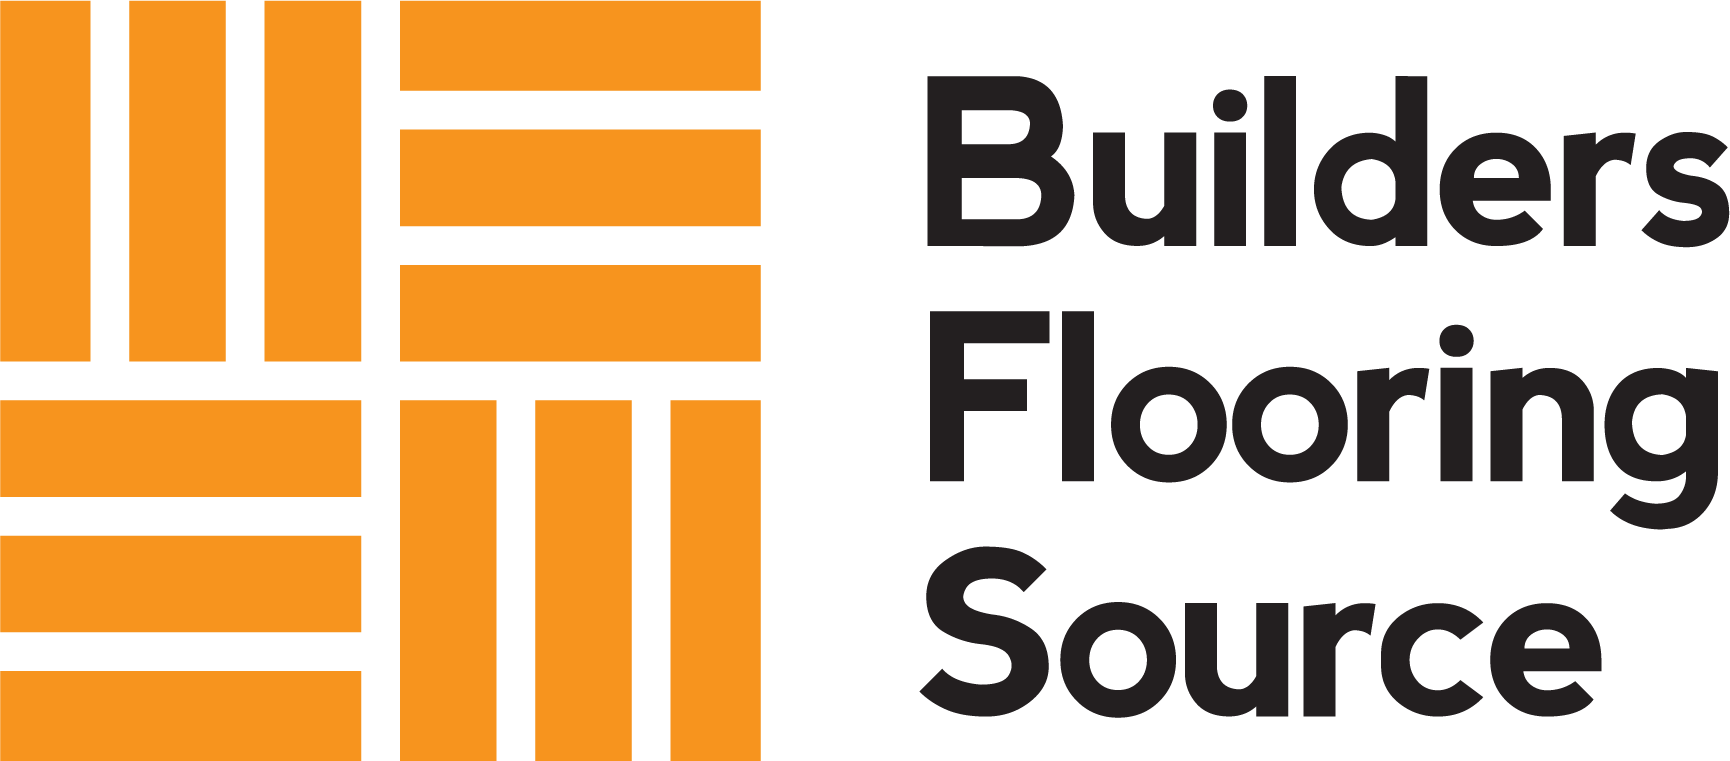 Builders Flooring Source